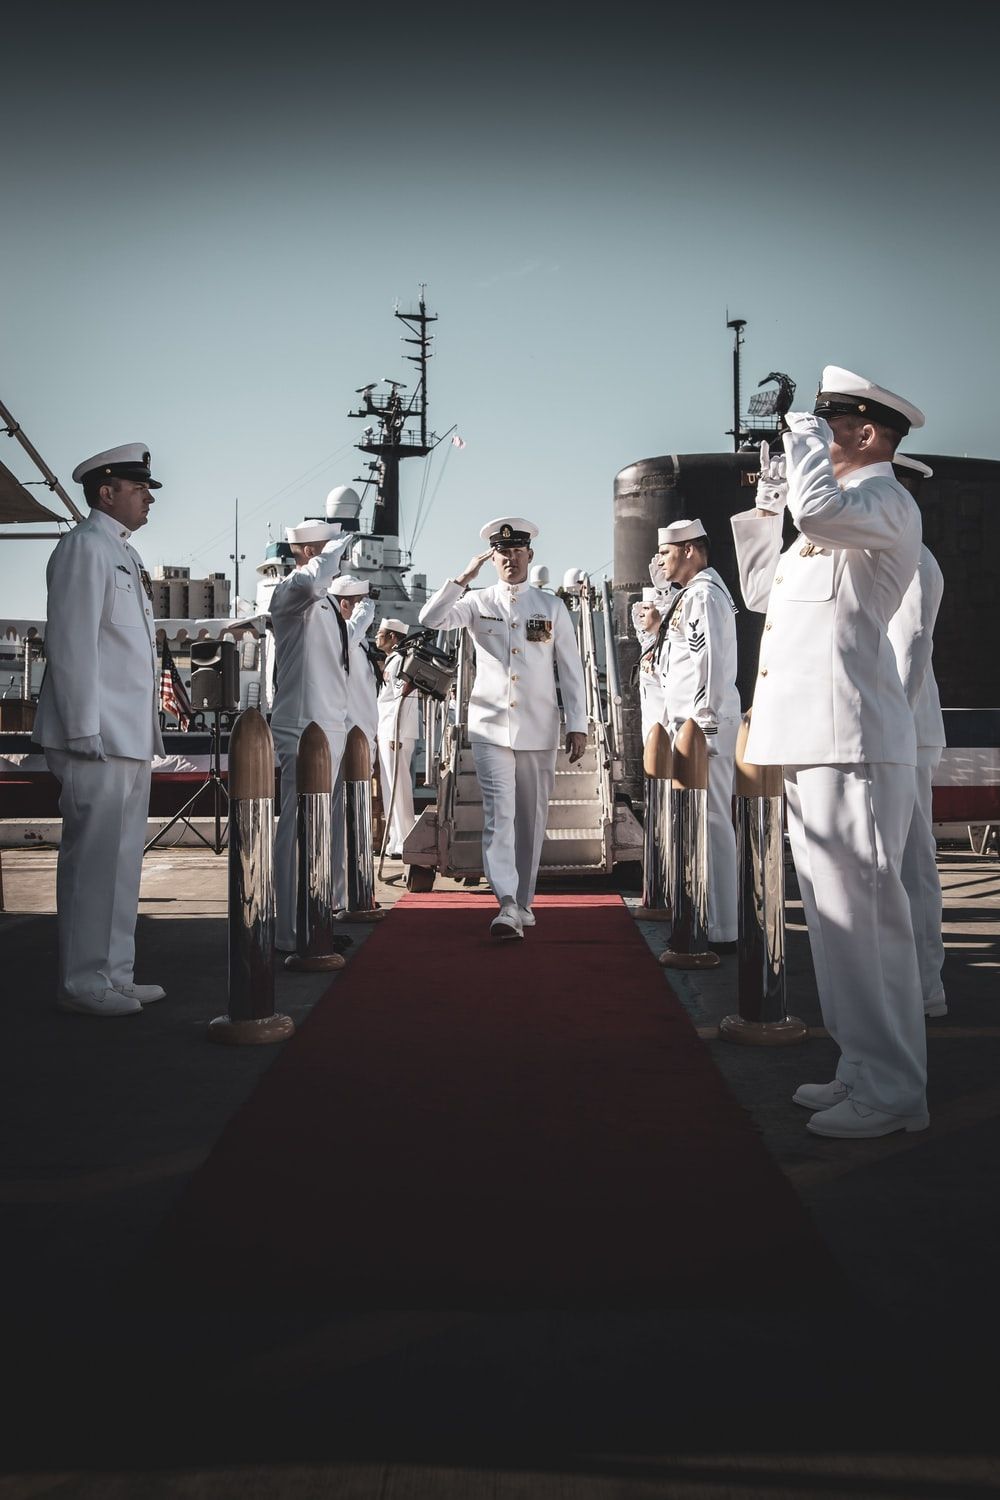 1K+ Navy Uniform Picture. Download Free Image